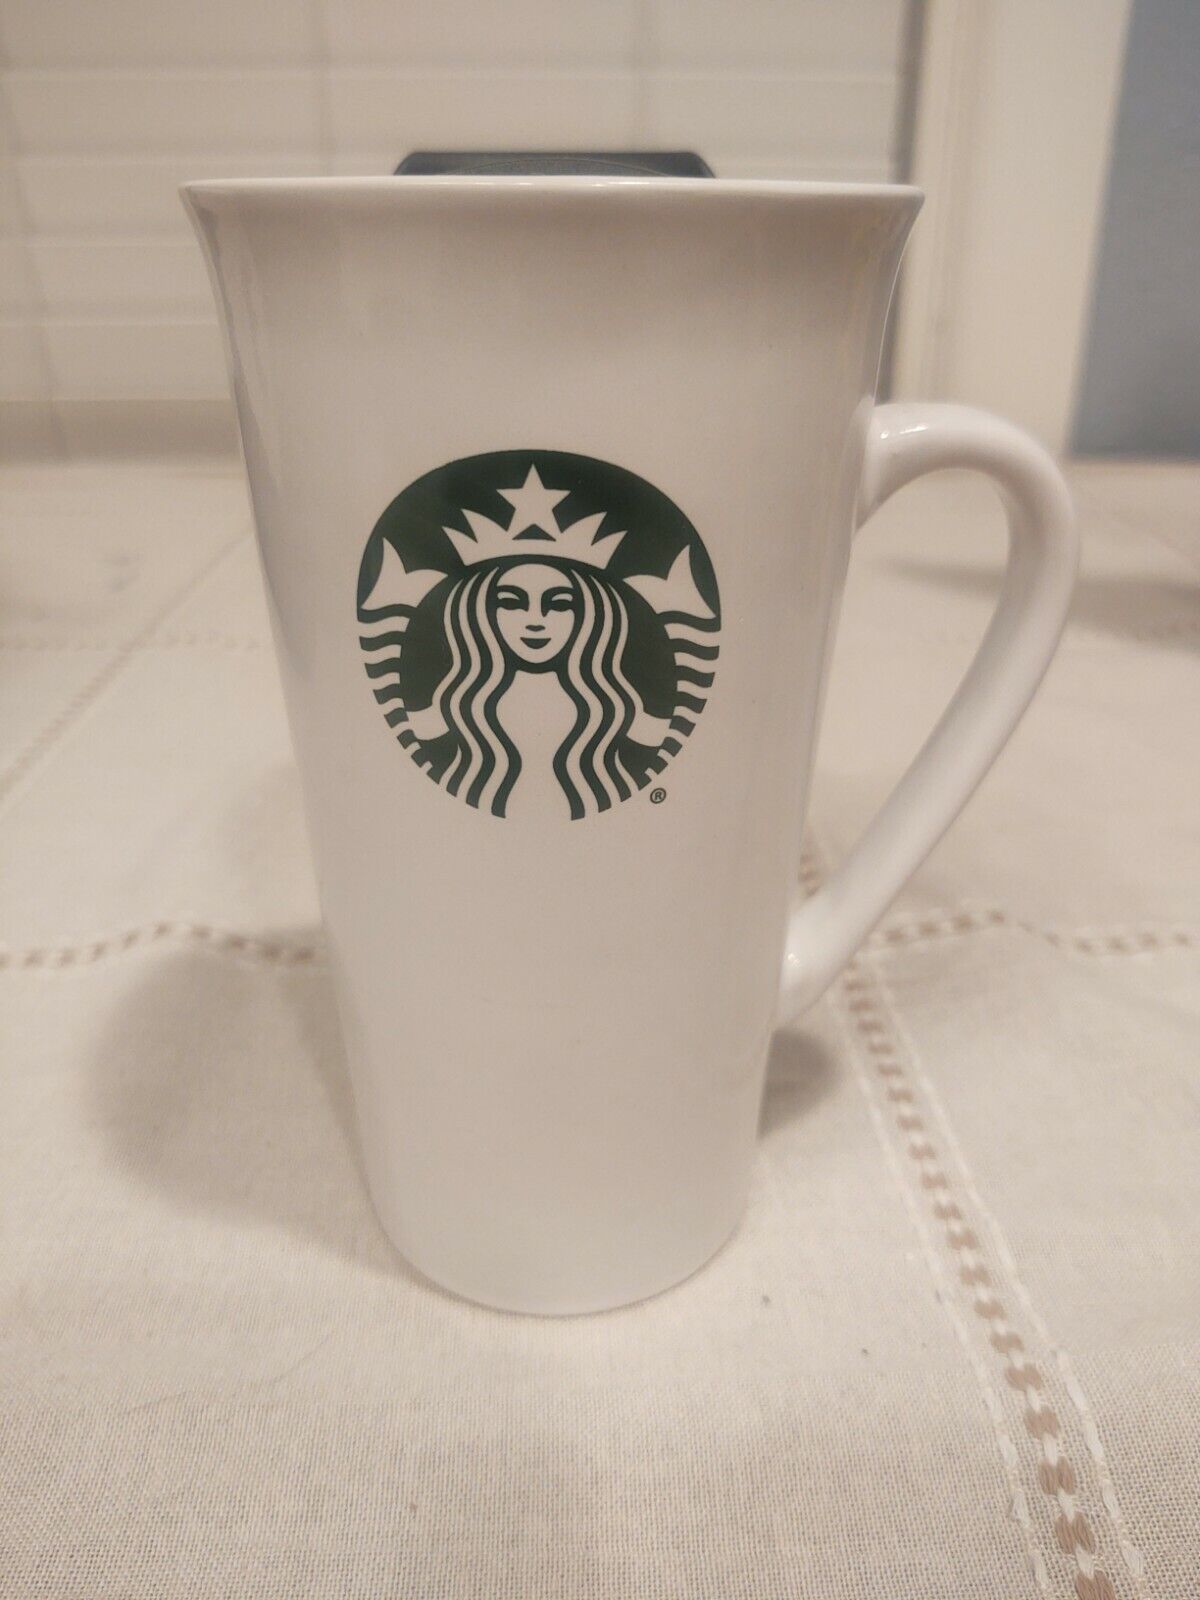 2015 Starbucks 14.3 fl oz Ceramic Travel Tumbler mug. White with Green Mermaid 